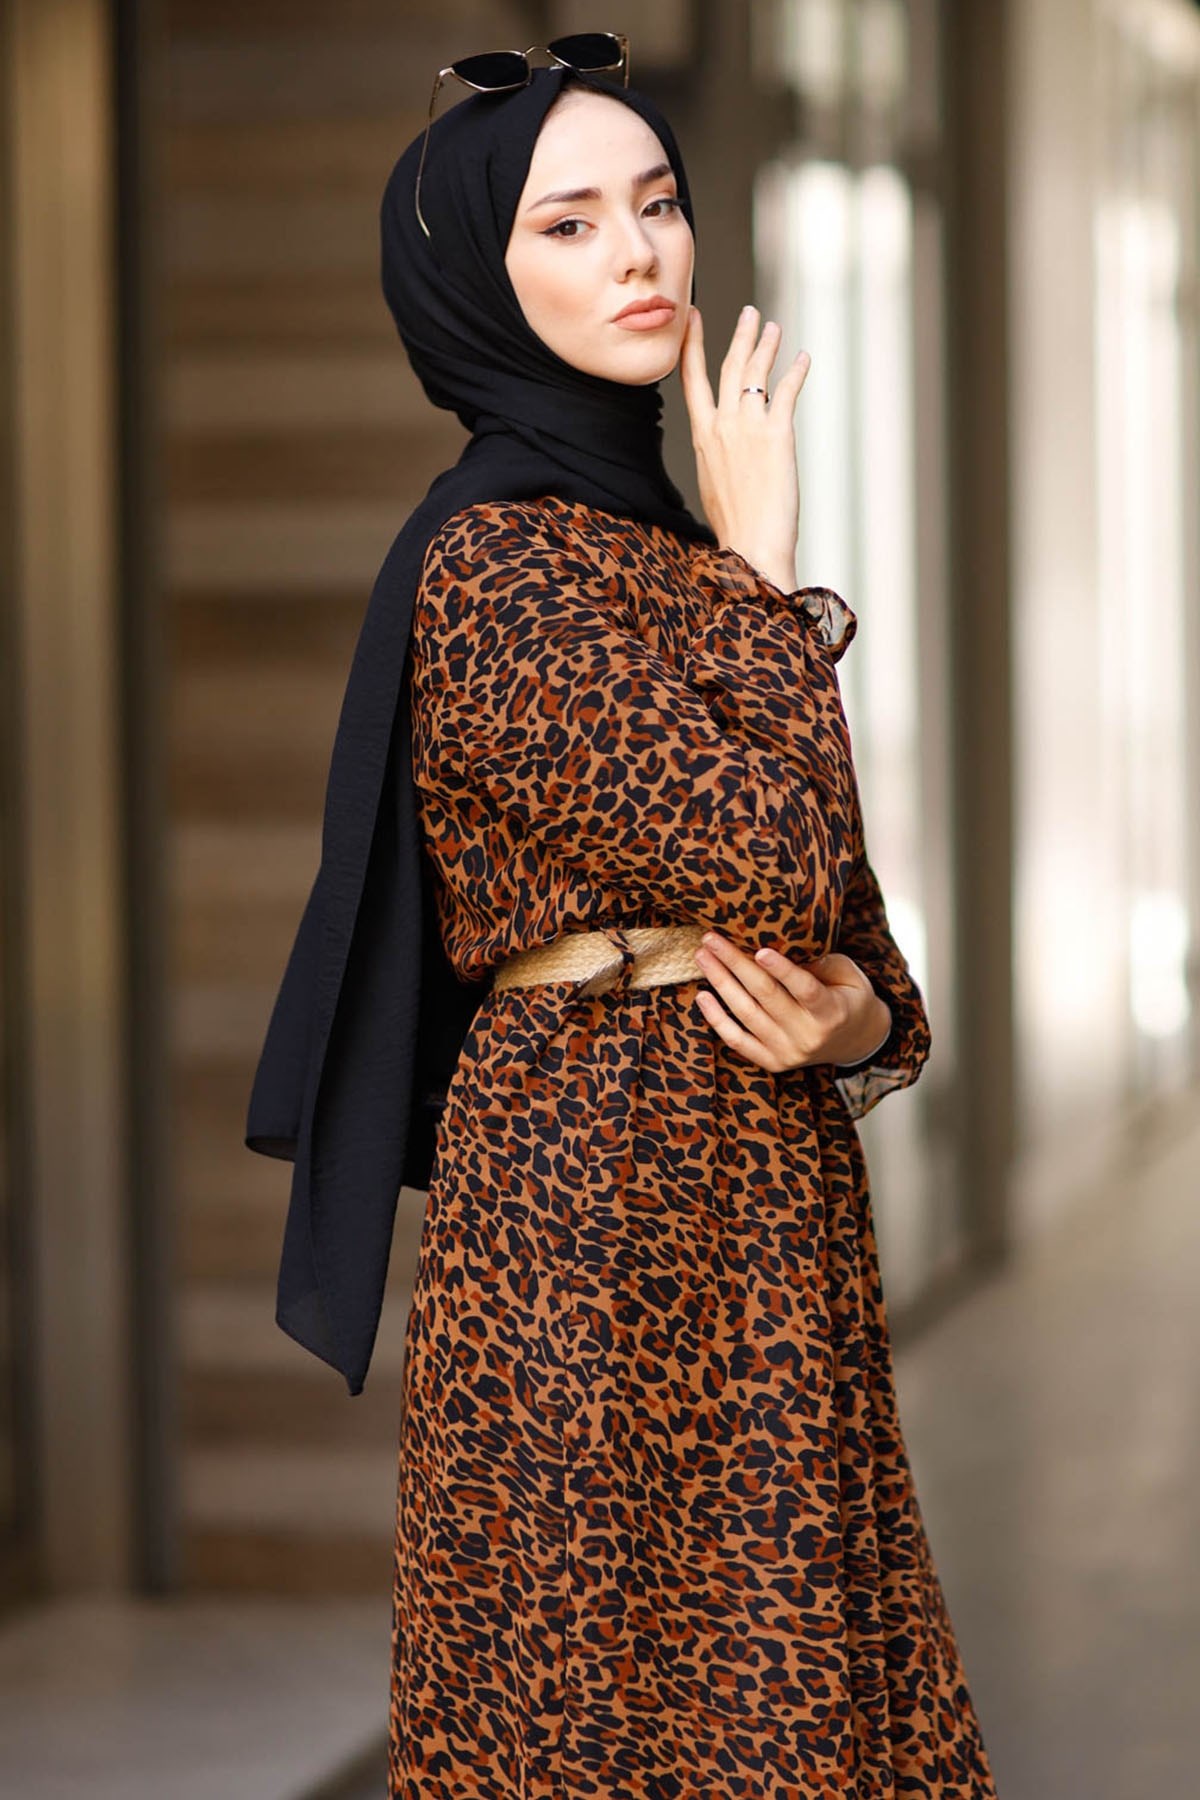 Leopard Patterned Chiffon Dress - Brown